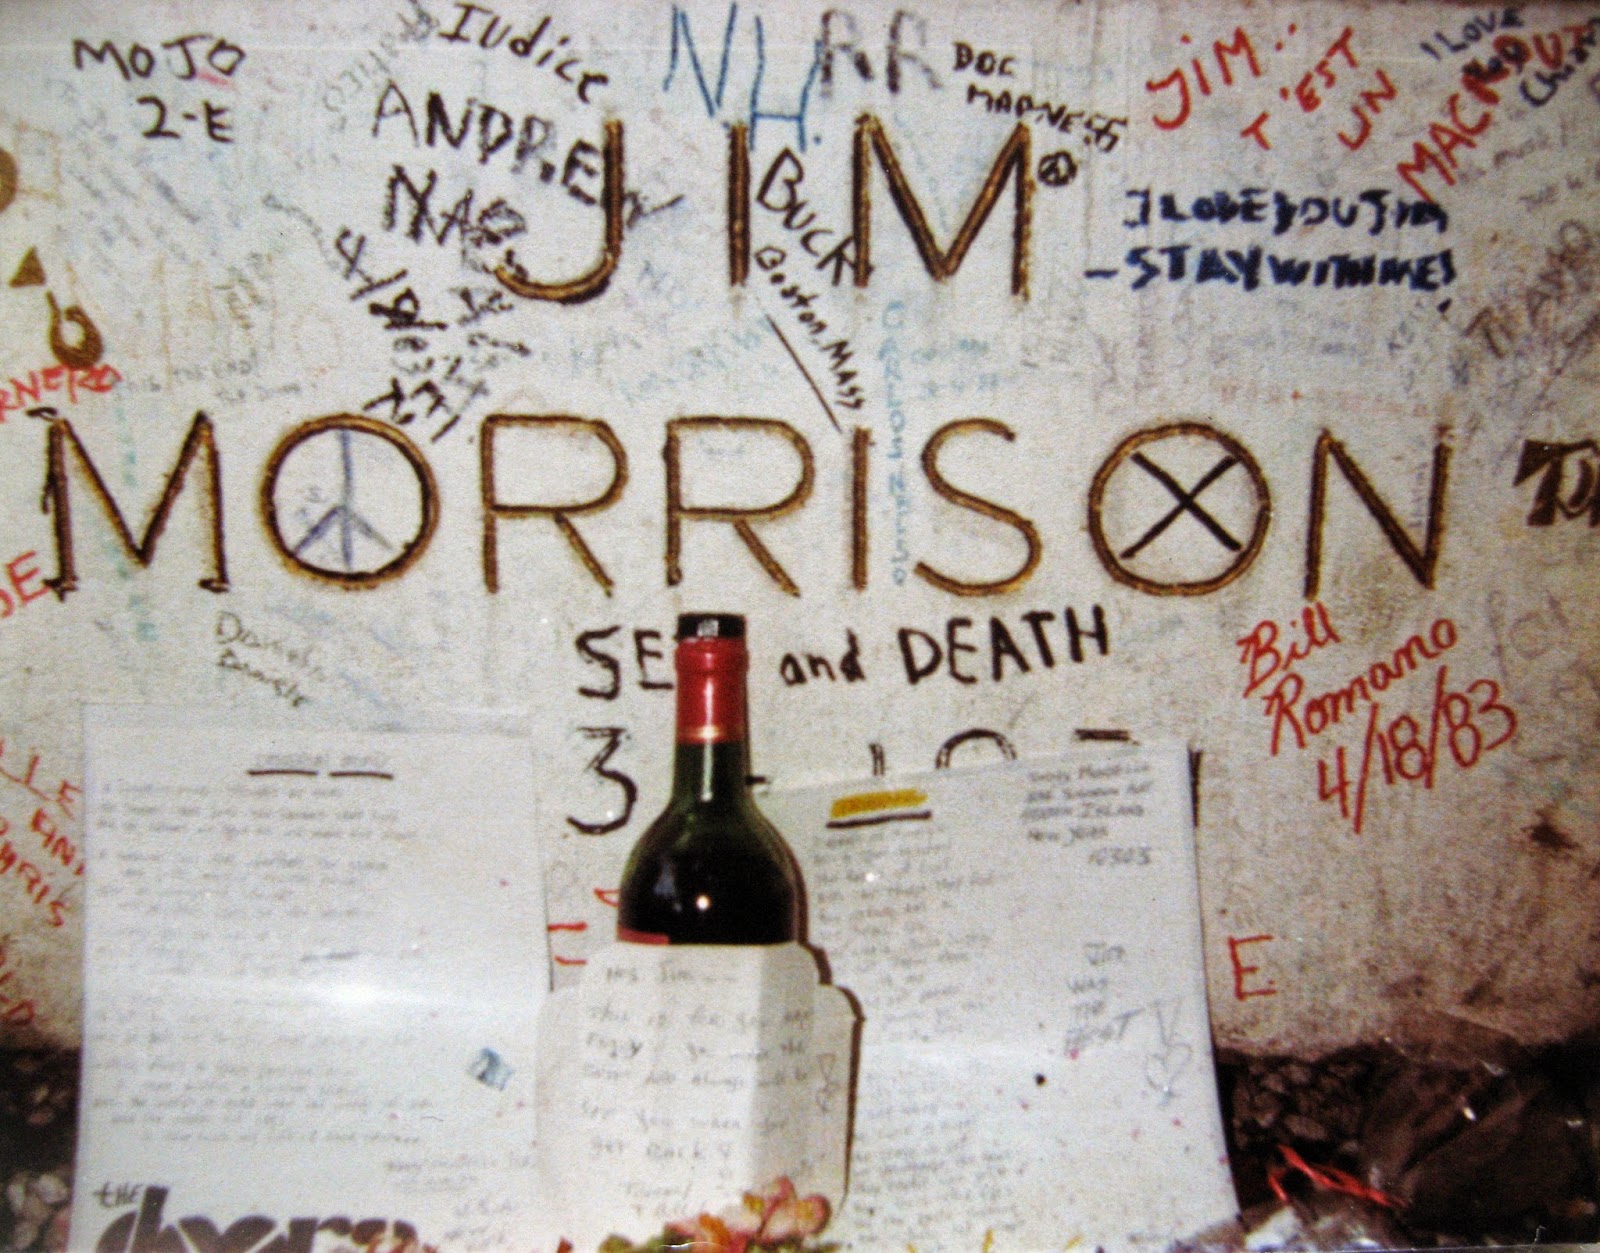 Jim Morrison grave site Pere-Lachaise Cemetery May 4, 1983